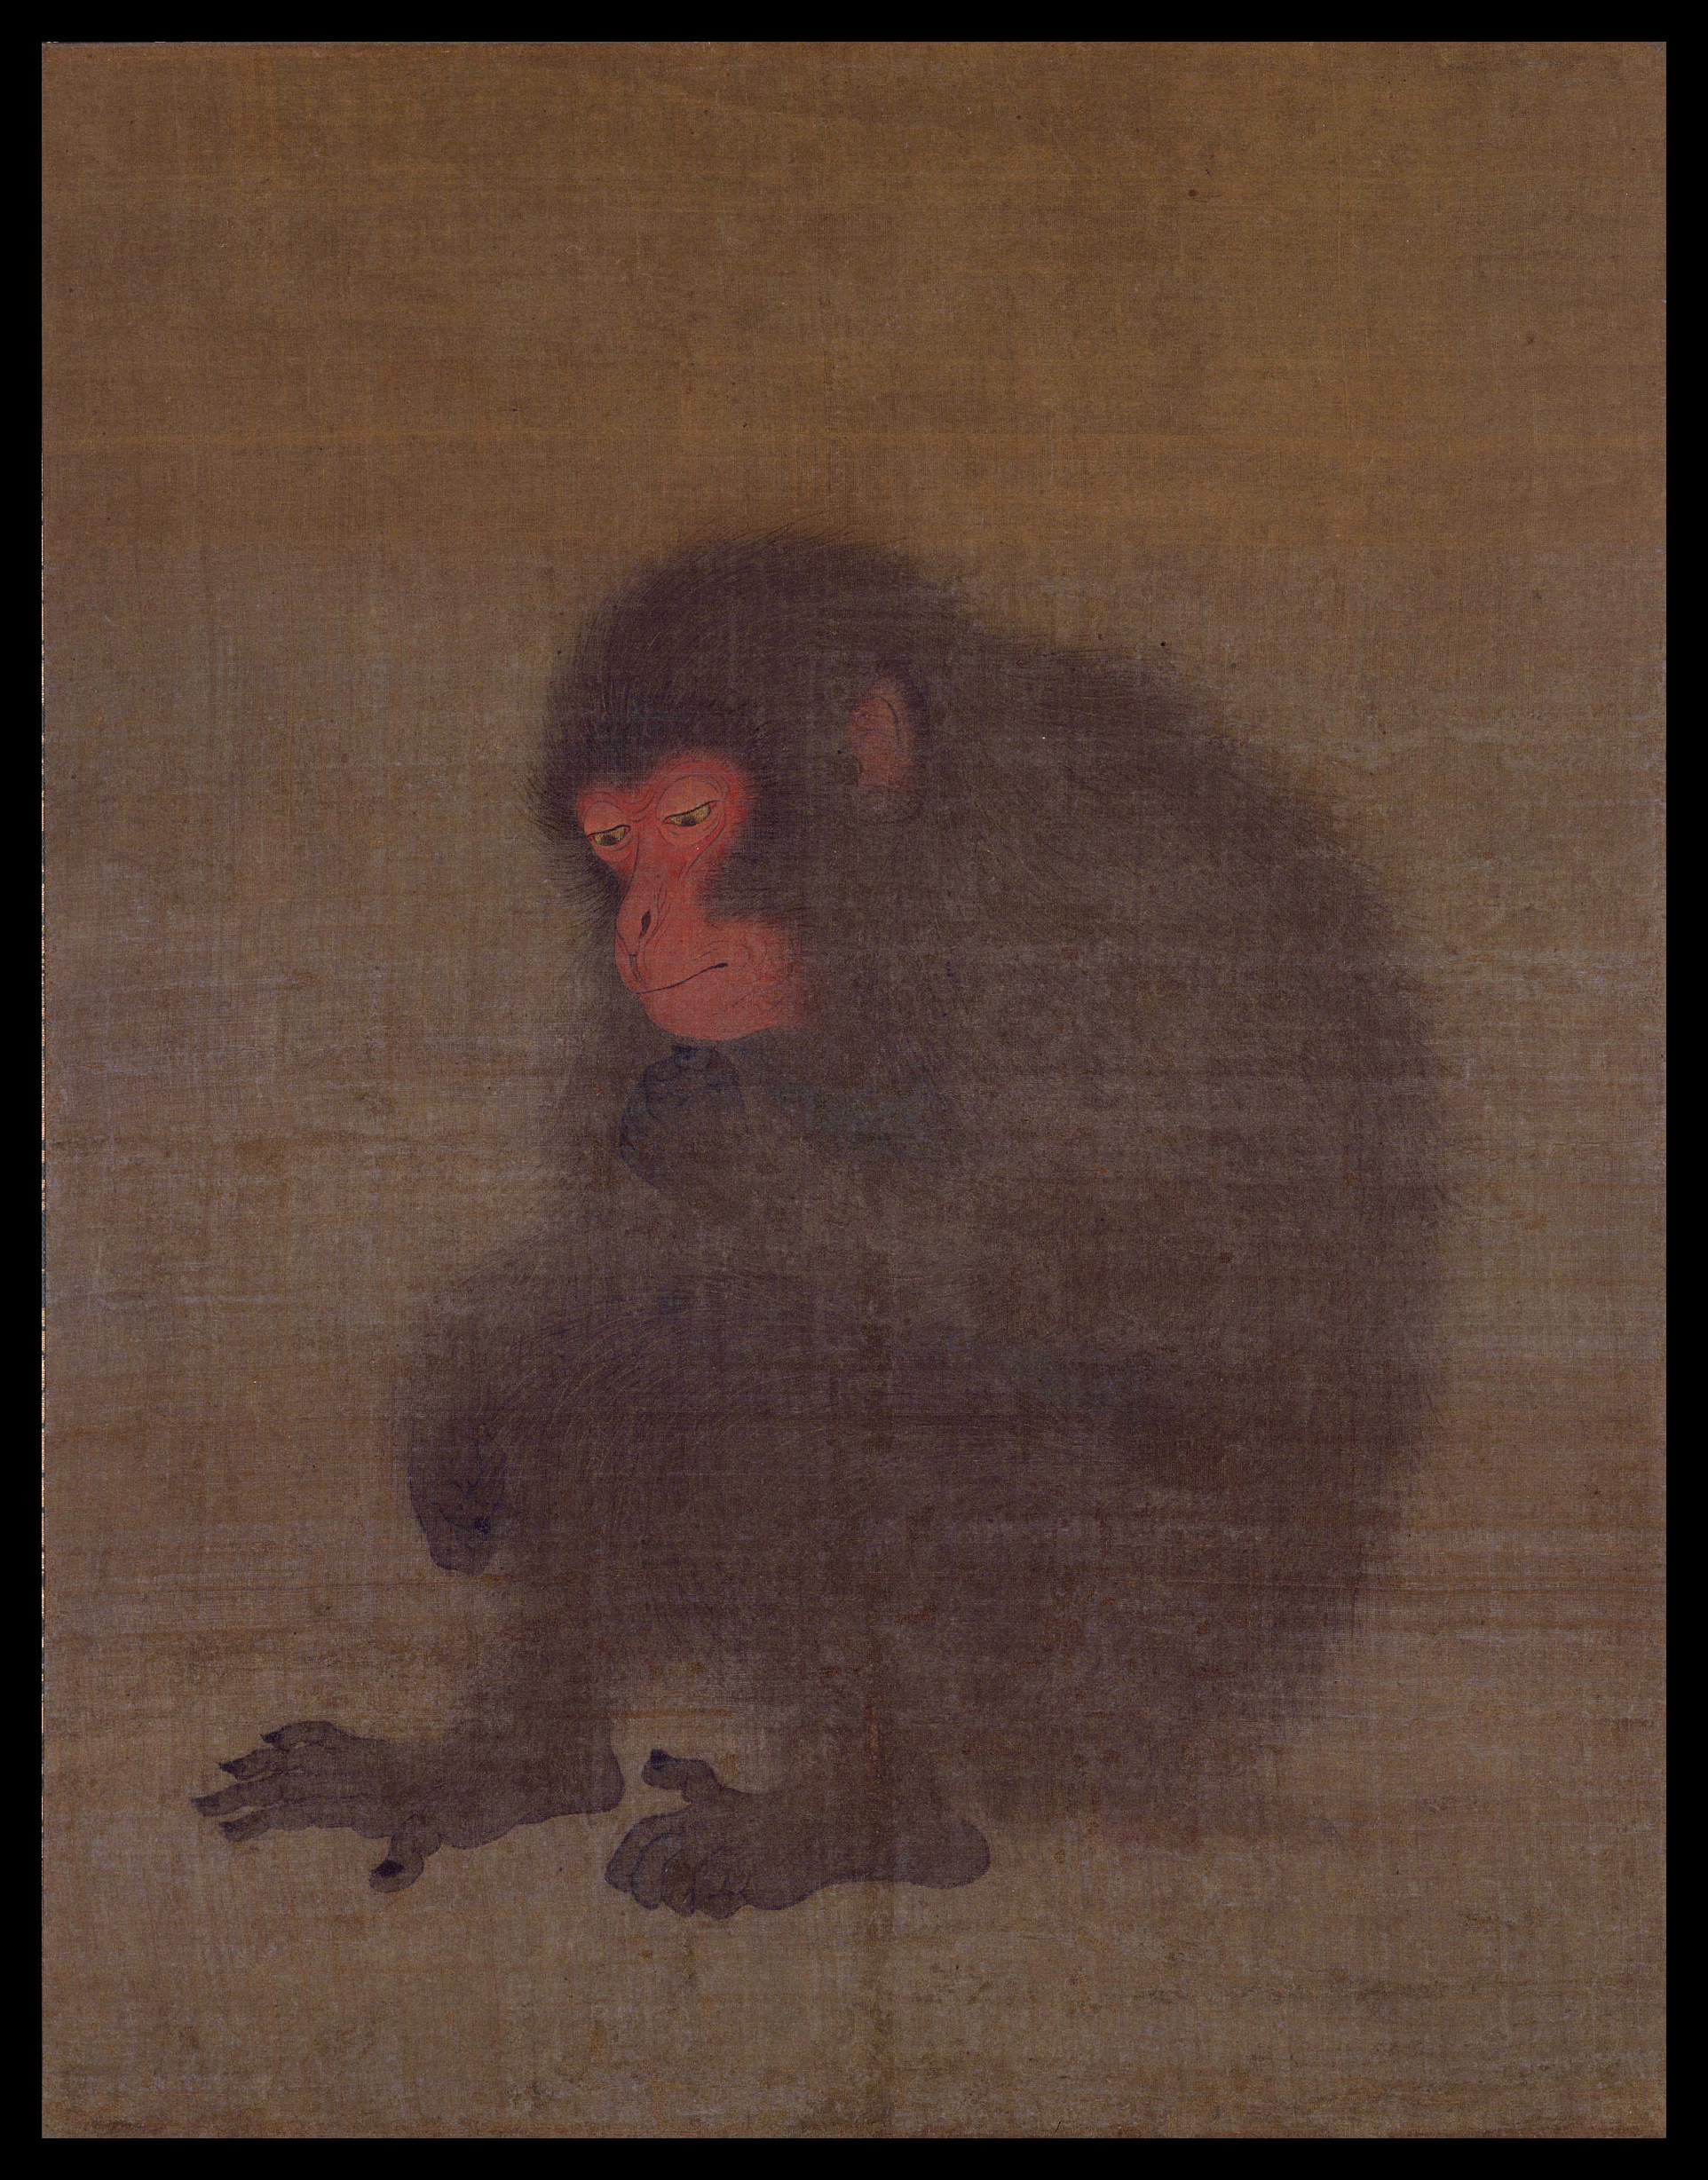 Egy majom by Mao Song - 12. század 2. negyede  - 47,1 x 36,7 cm 